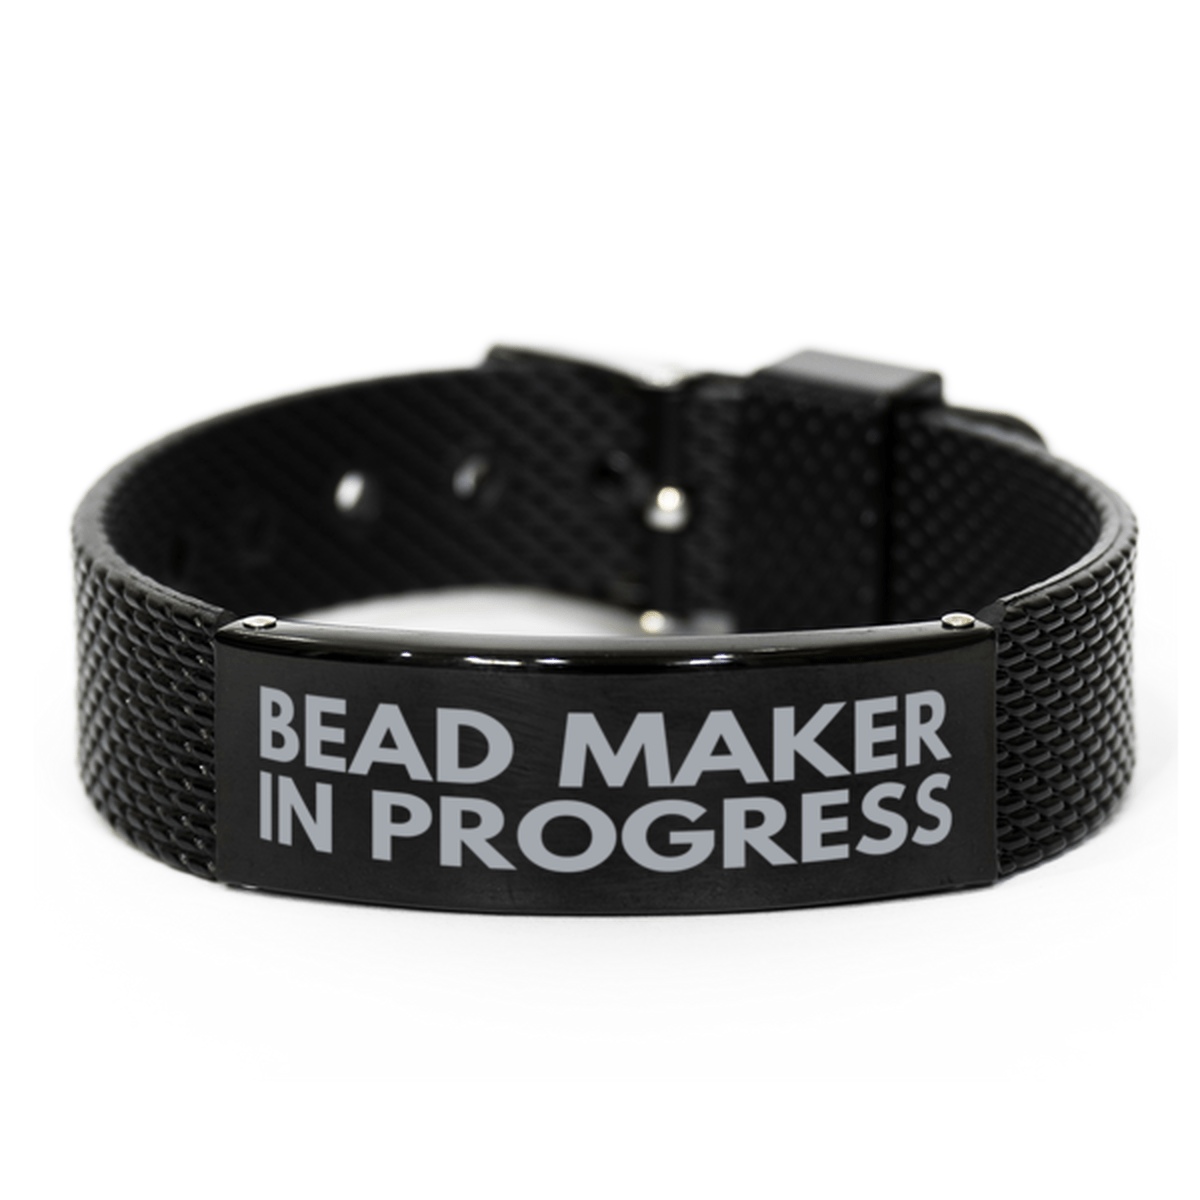 Inspirational Bead Maker Black Shark Mesh Bracelet, Bead Maker In Progress, Best Graduation Gifts for Students